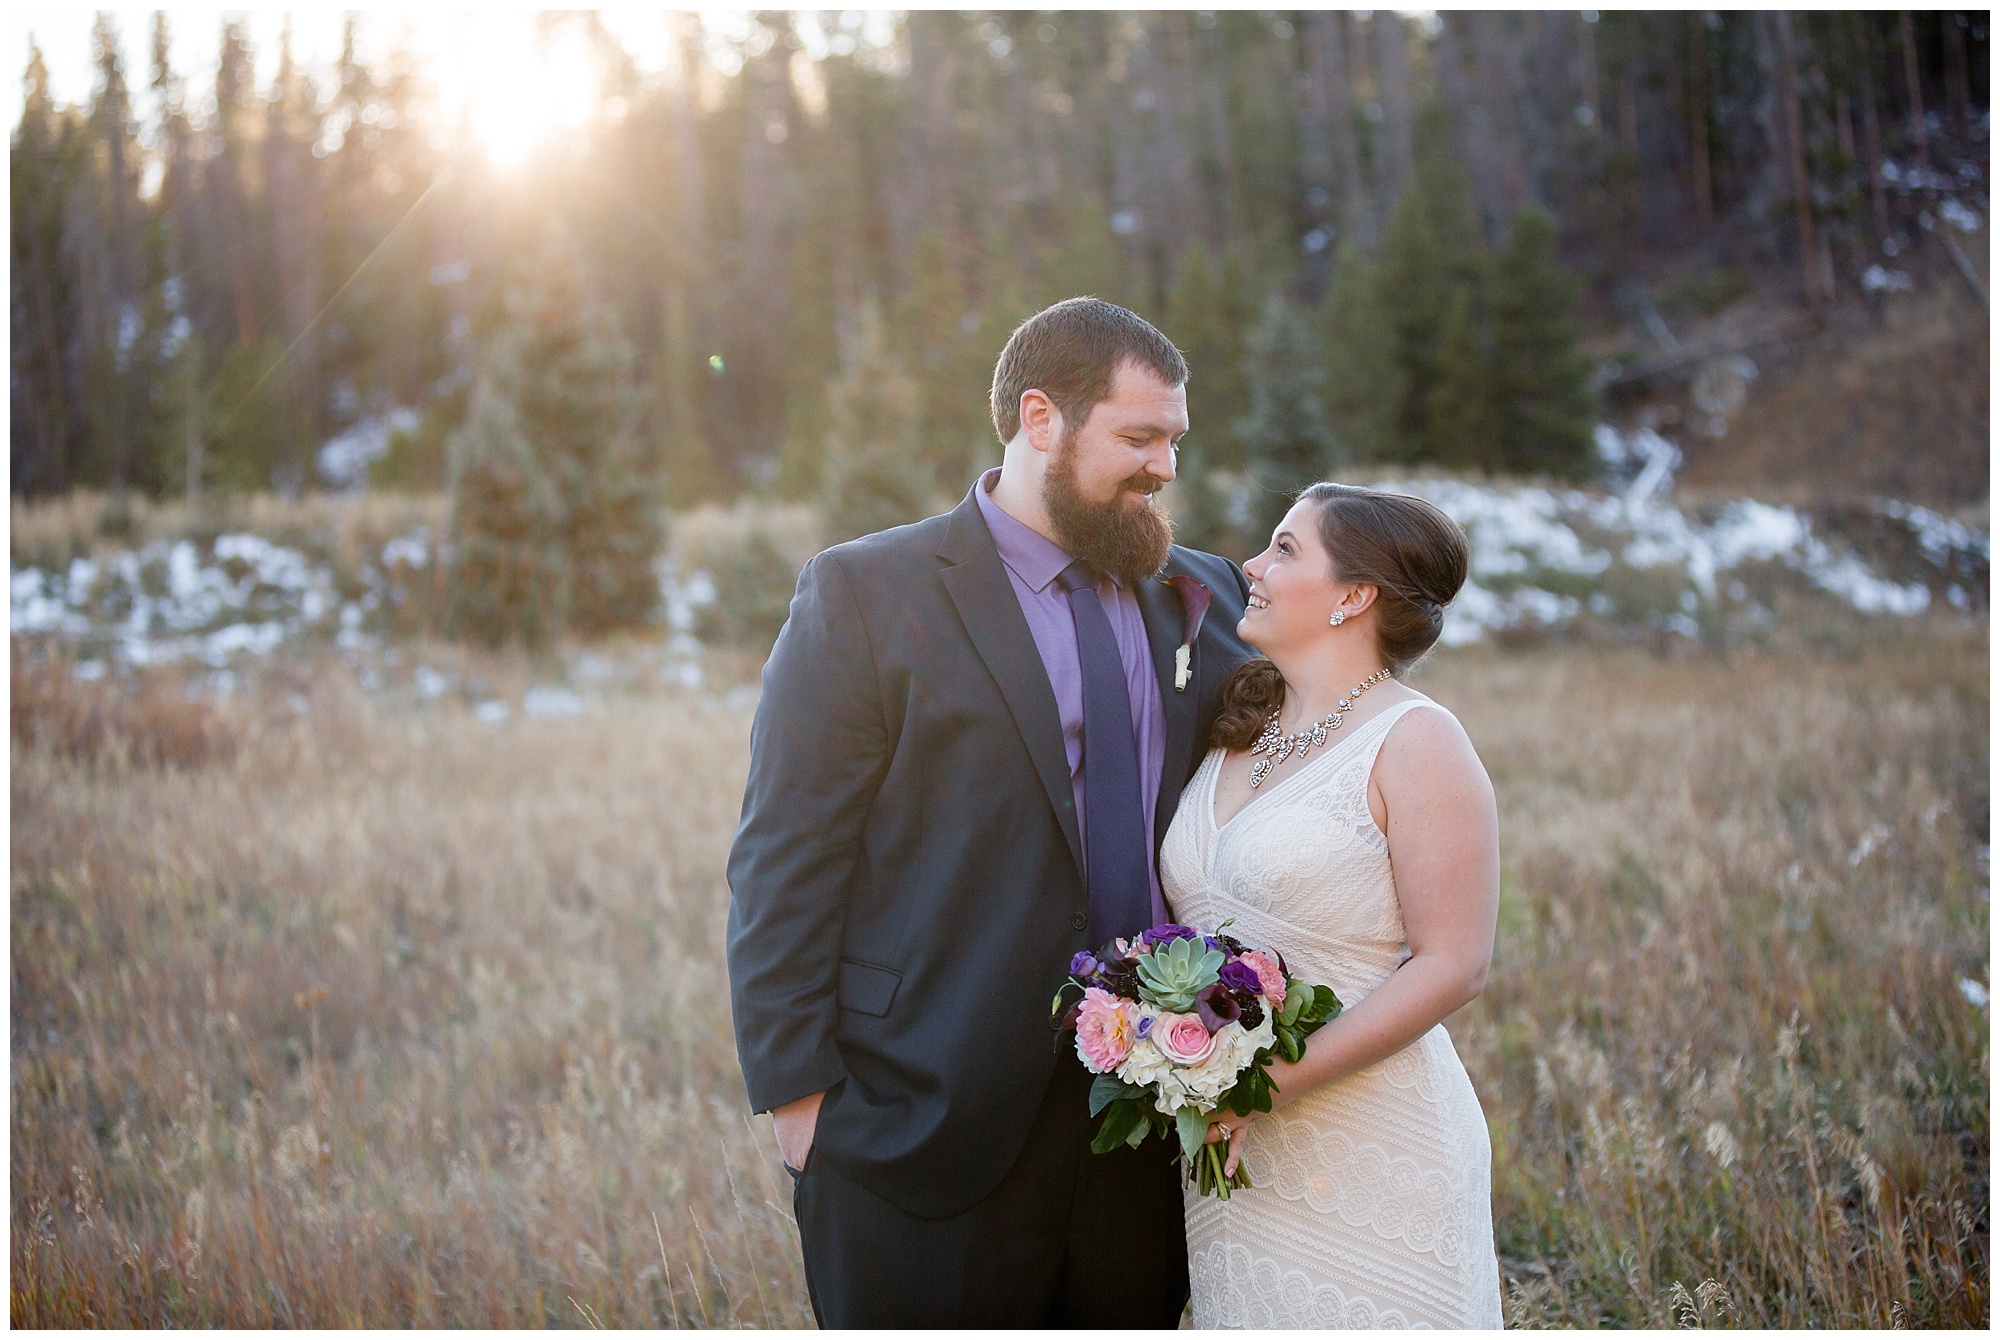 Portrait of a wedding couple at their Colorado mountain elopement.